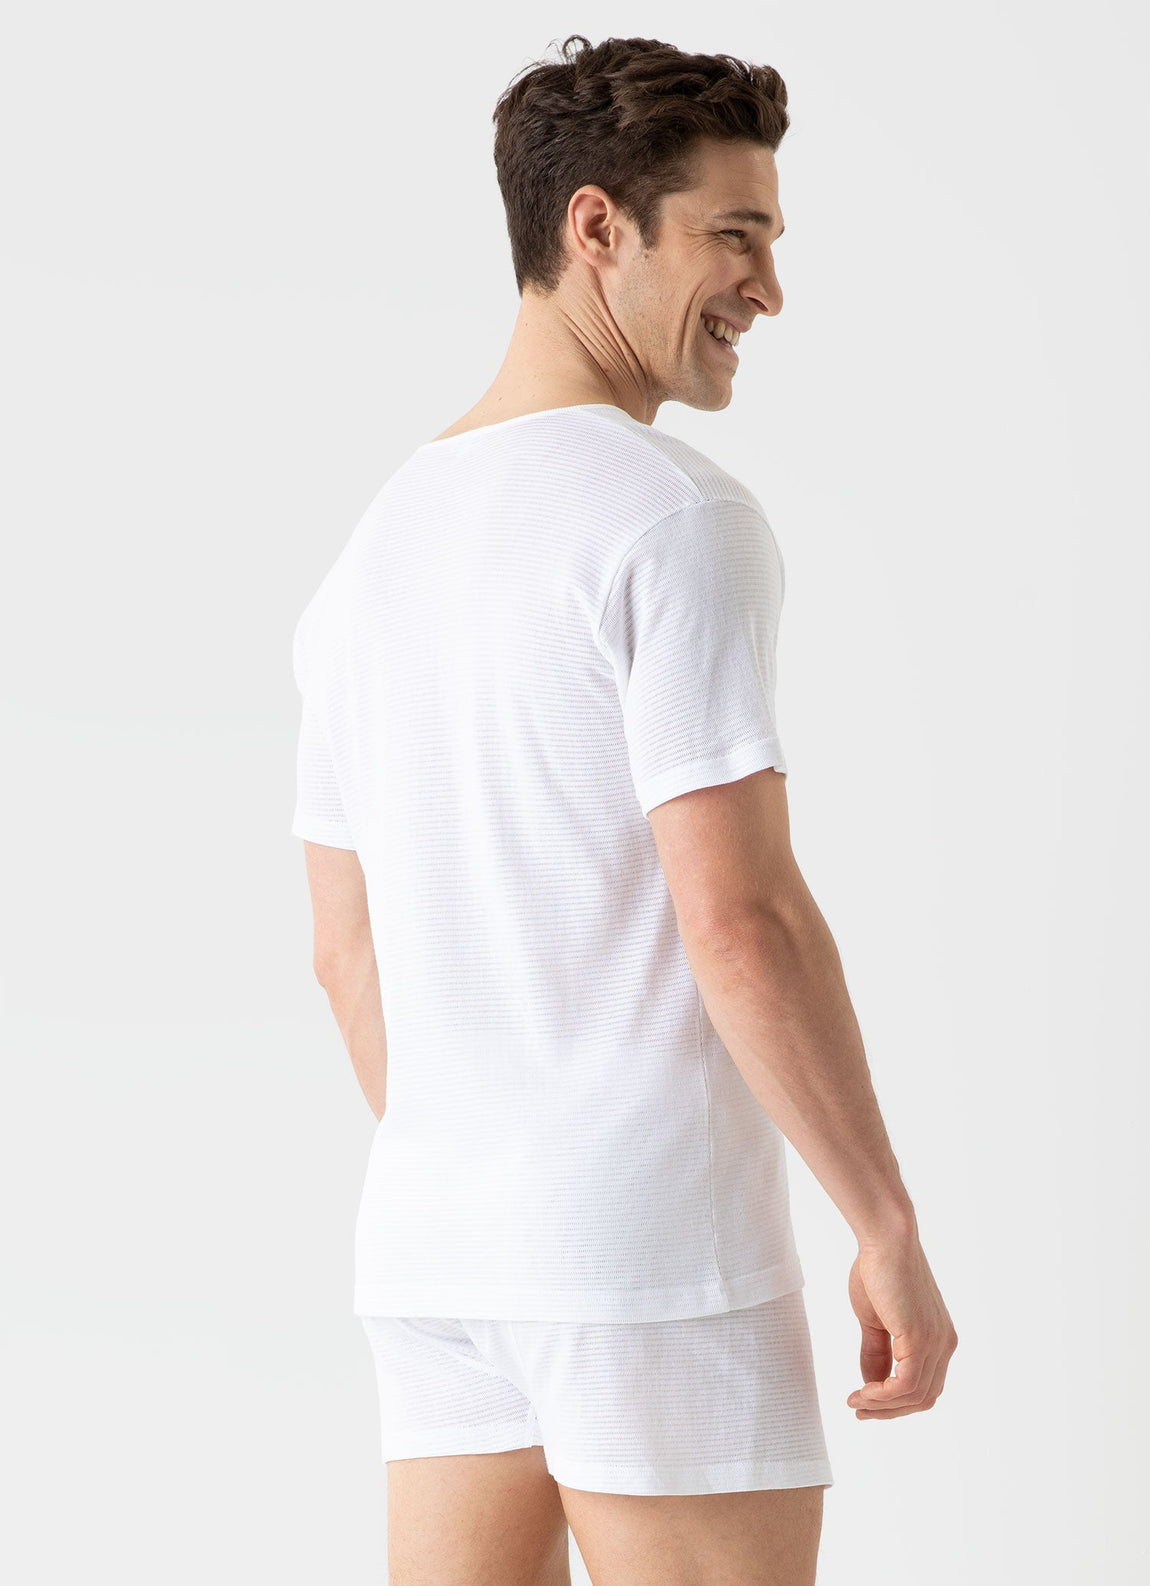 Men's Cellular Cotton Low V-Neck Underwear T-shirt in White | Sunspel